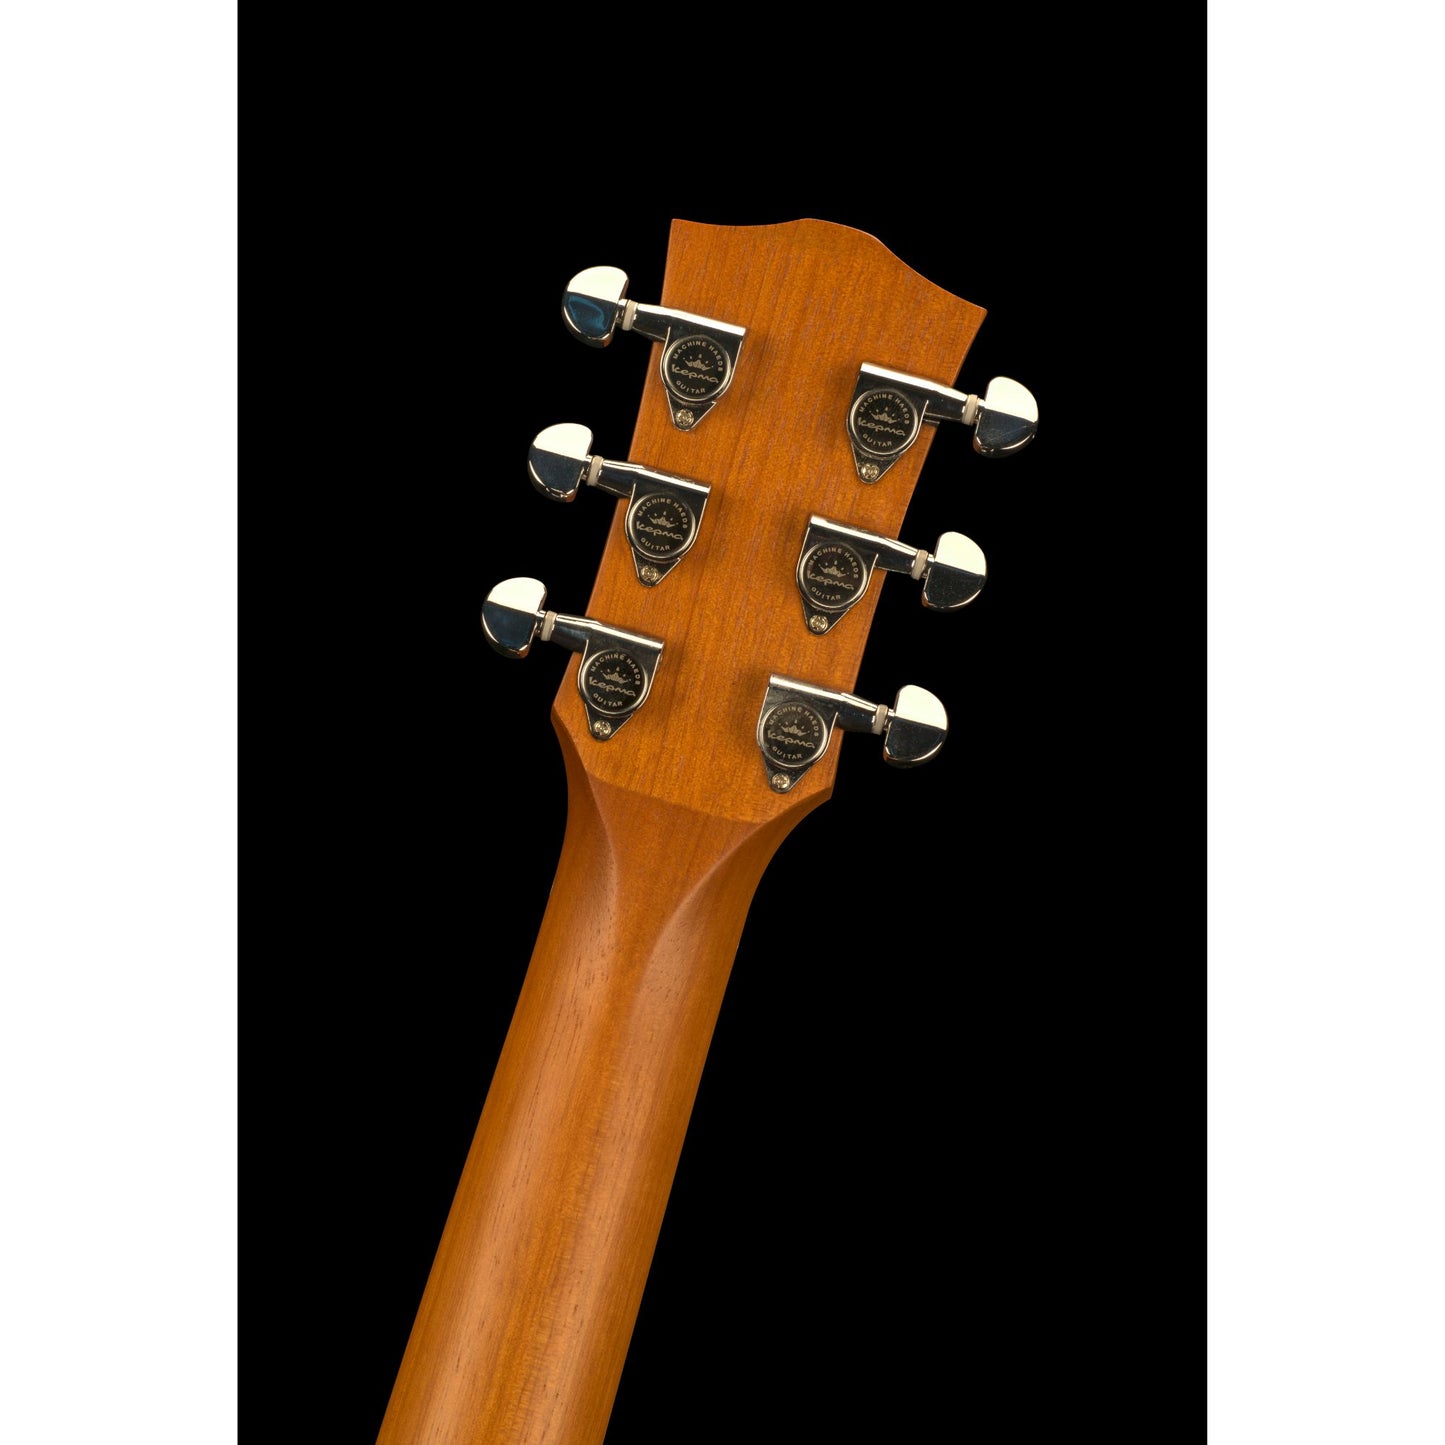 Kepma ES36-E TRANS K10 Semi - Acoustic Guitar - Sunburst Matt